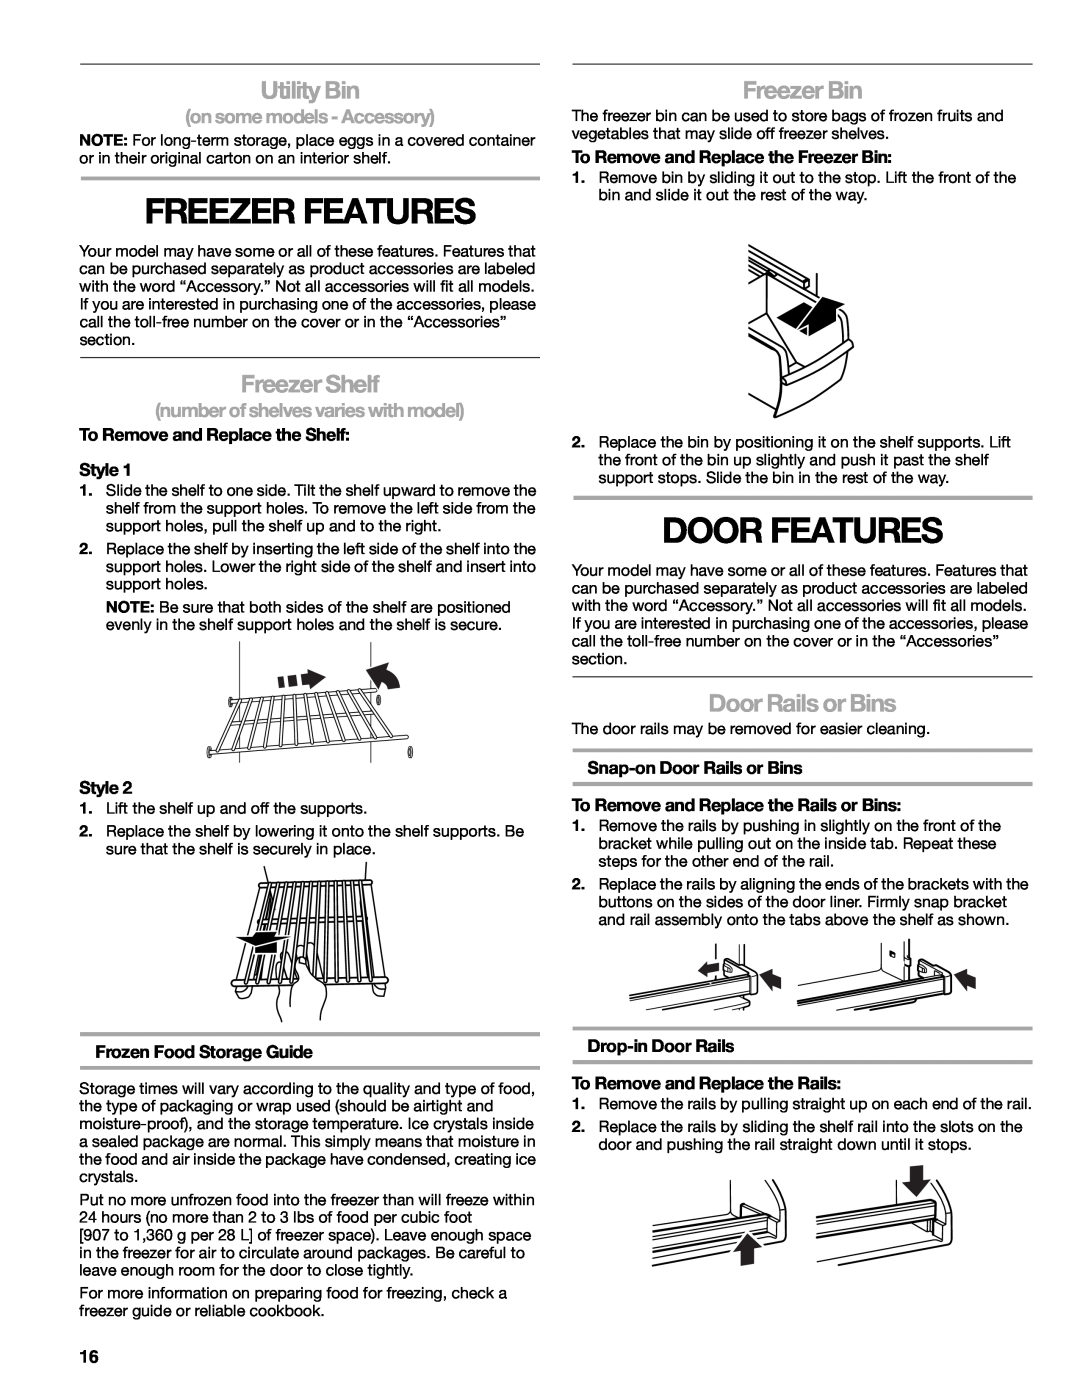 Sears T1KB2/T1RFKB2 Freezer Features, Door Features, Utility Bin, Freezer Shelf, Freezer Bin, Door Rails or Bins, Style 